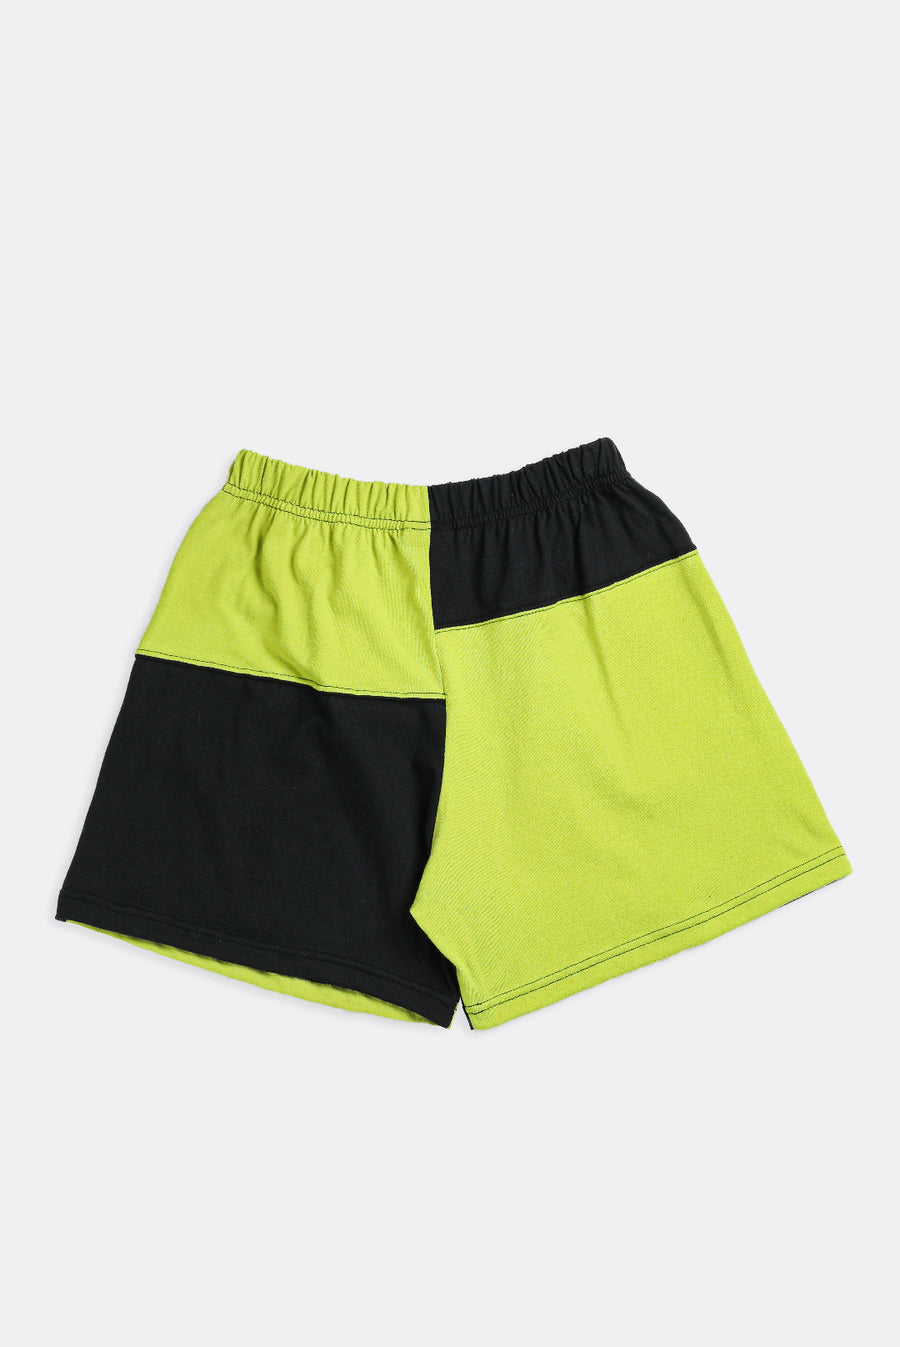 Unisex Rework Carhartt Patchwork Tee Shorts - S, M